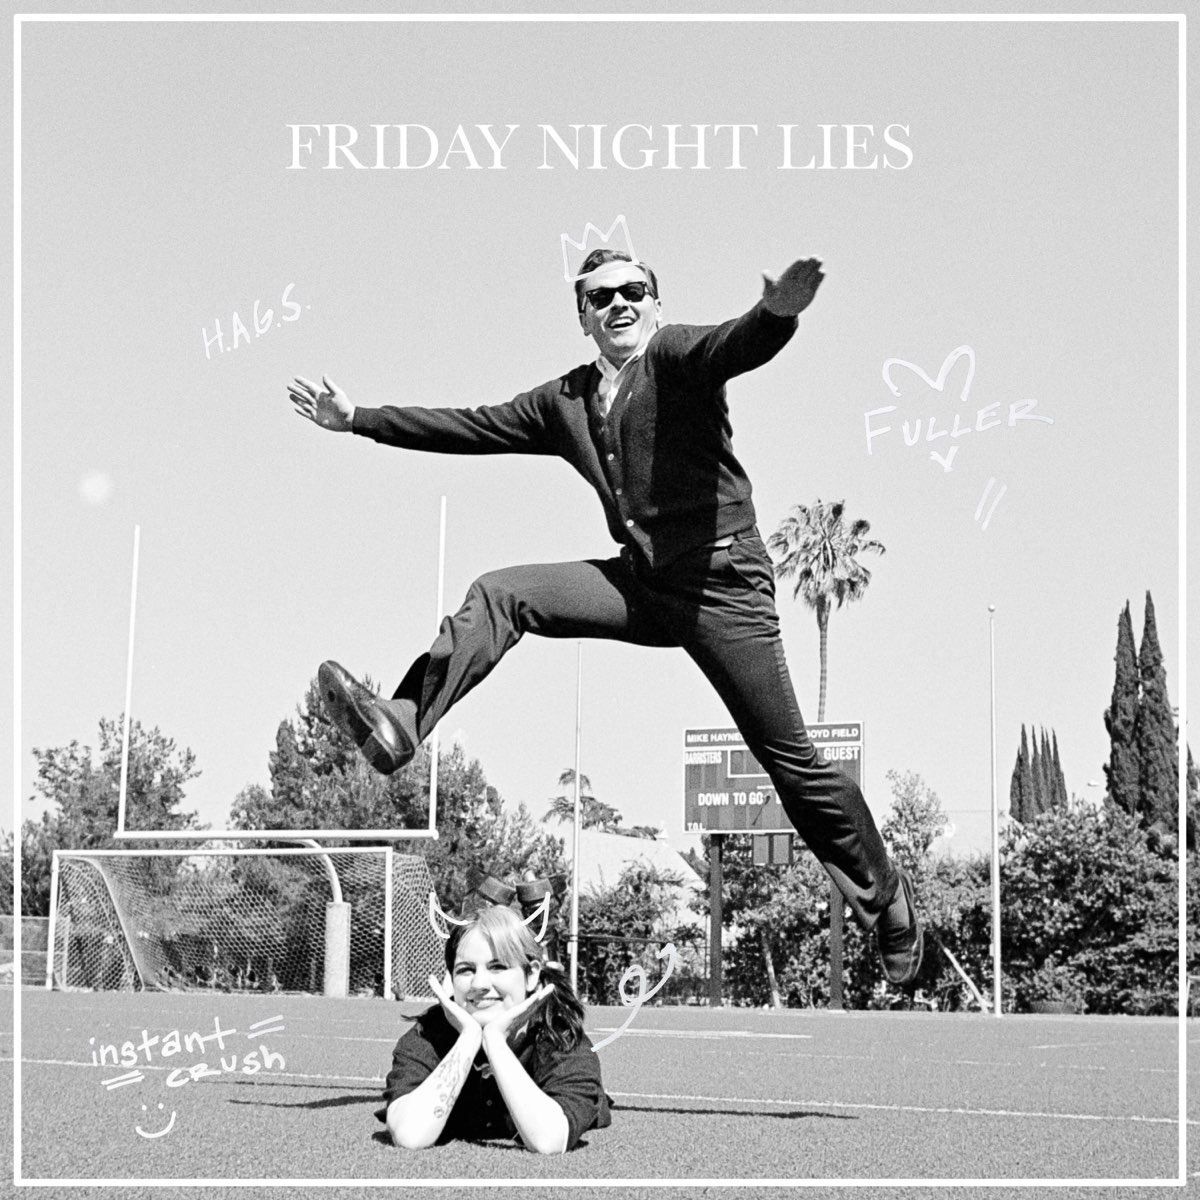 Friday Night Lies - Single - Album by Fuller & instant crush - Apple Music